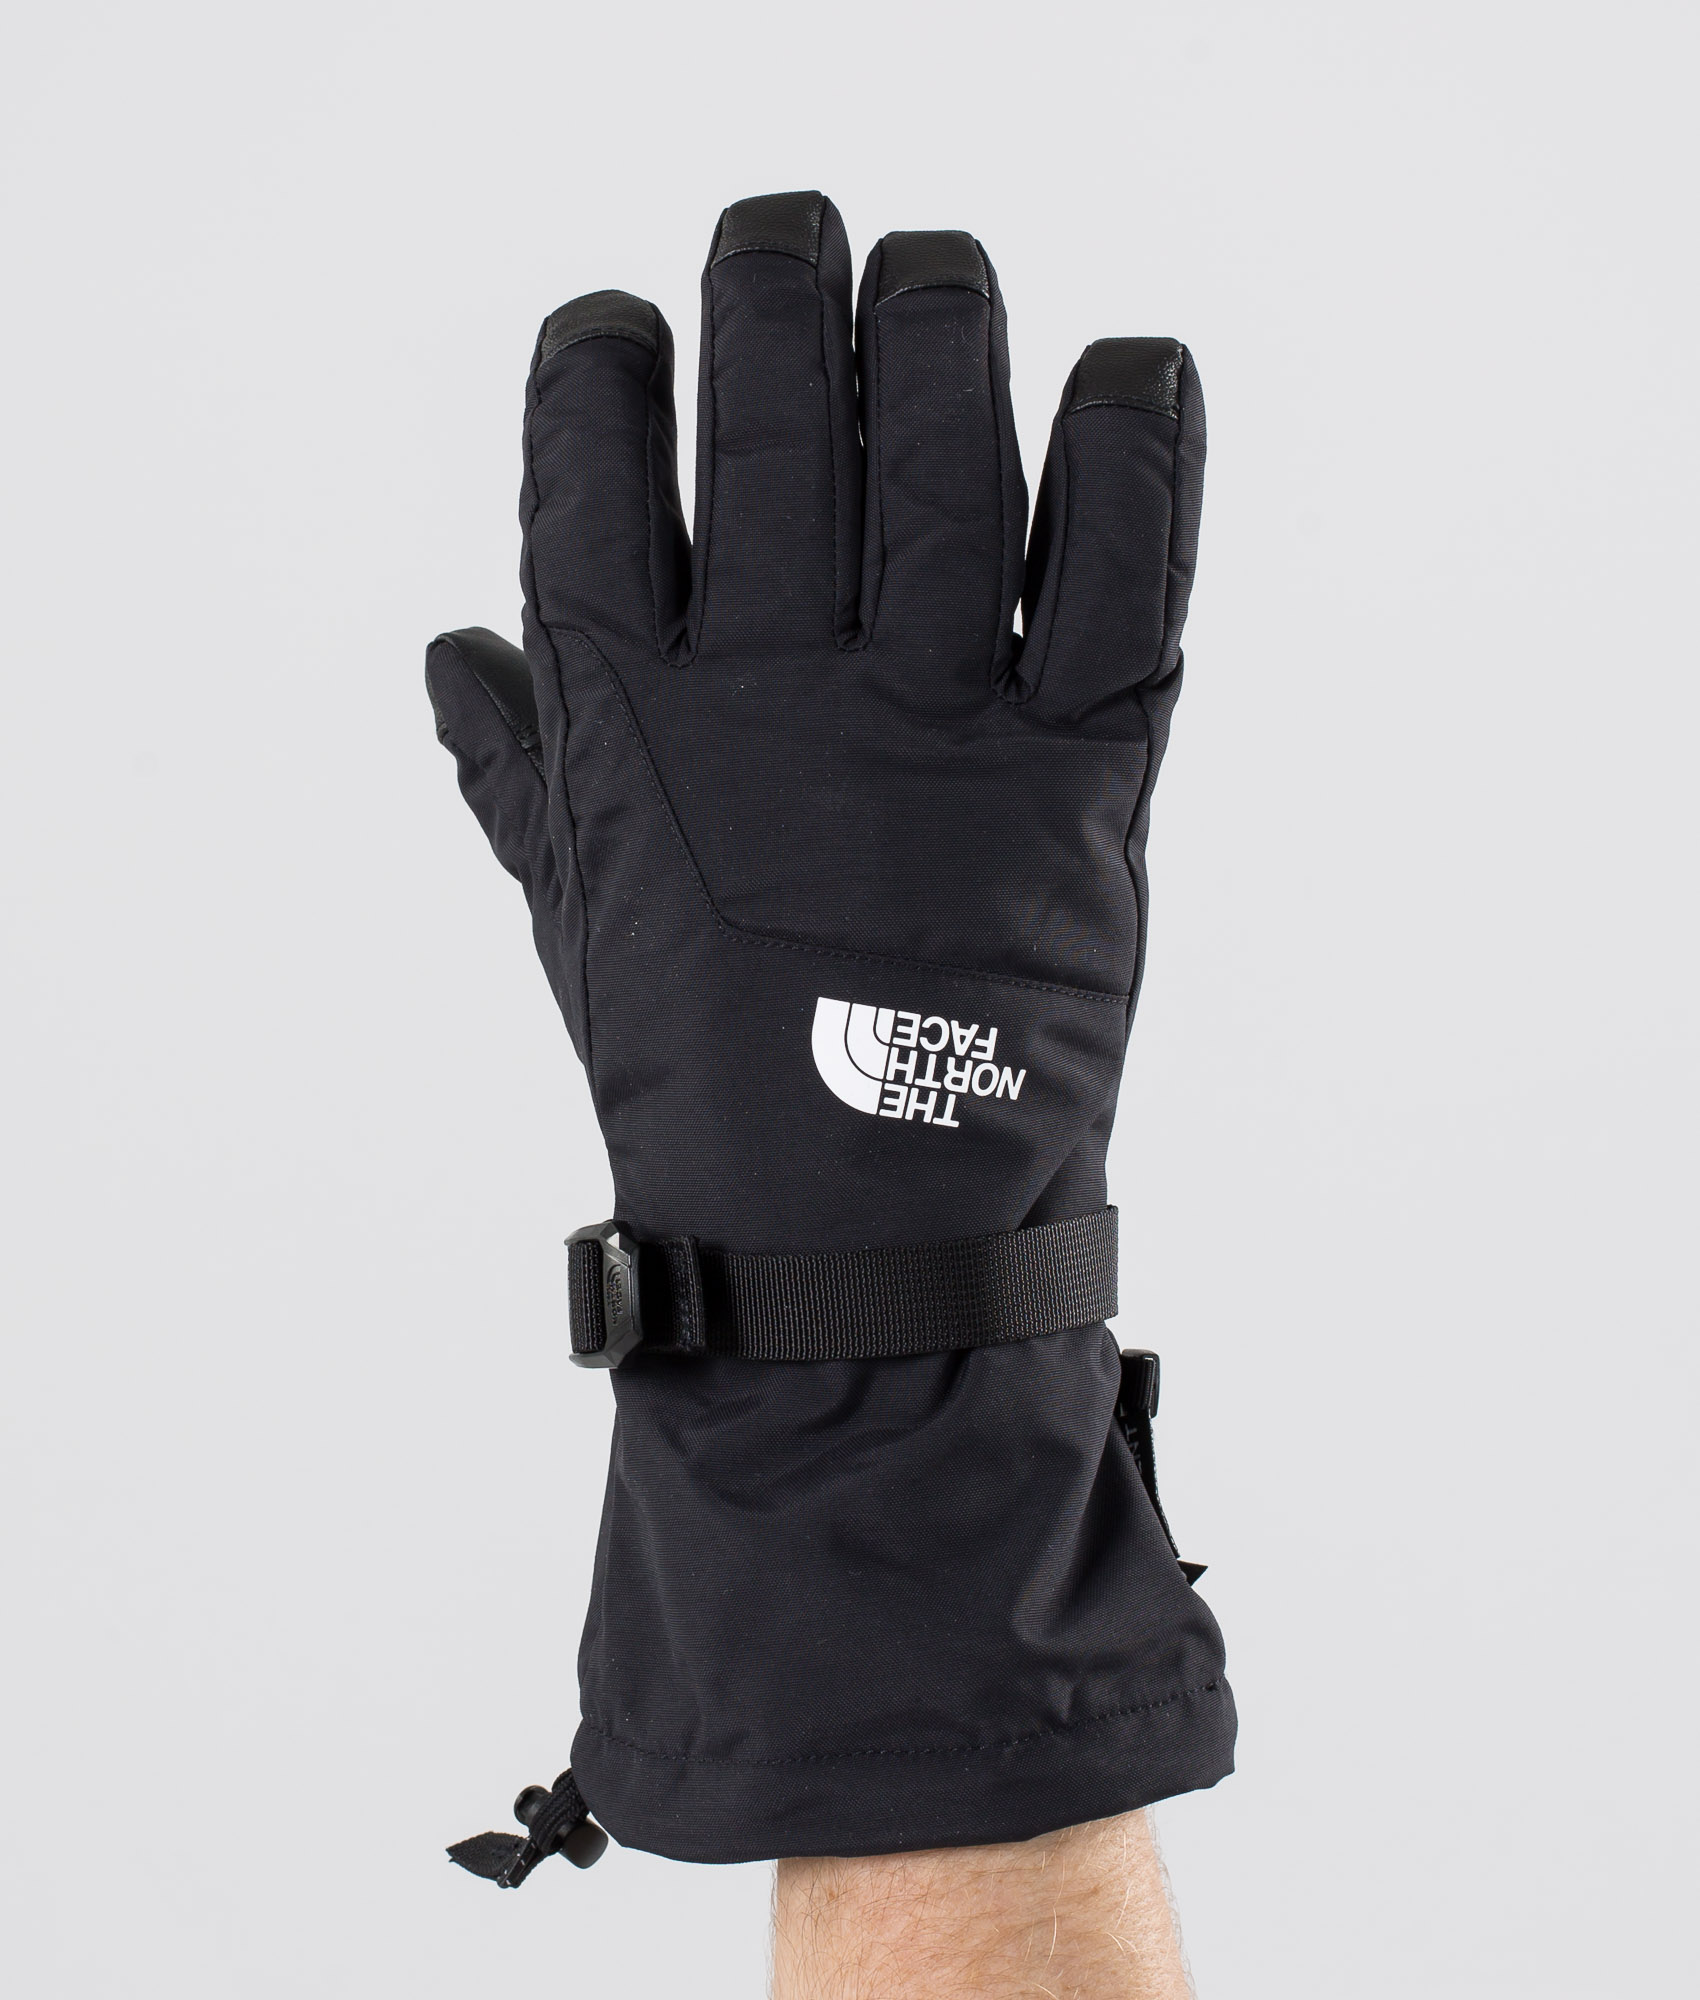 mens ski gloves north face